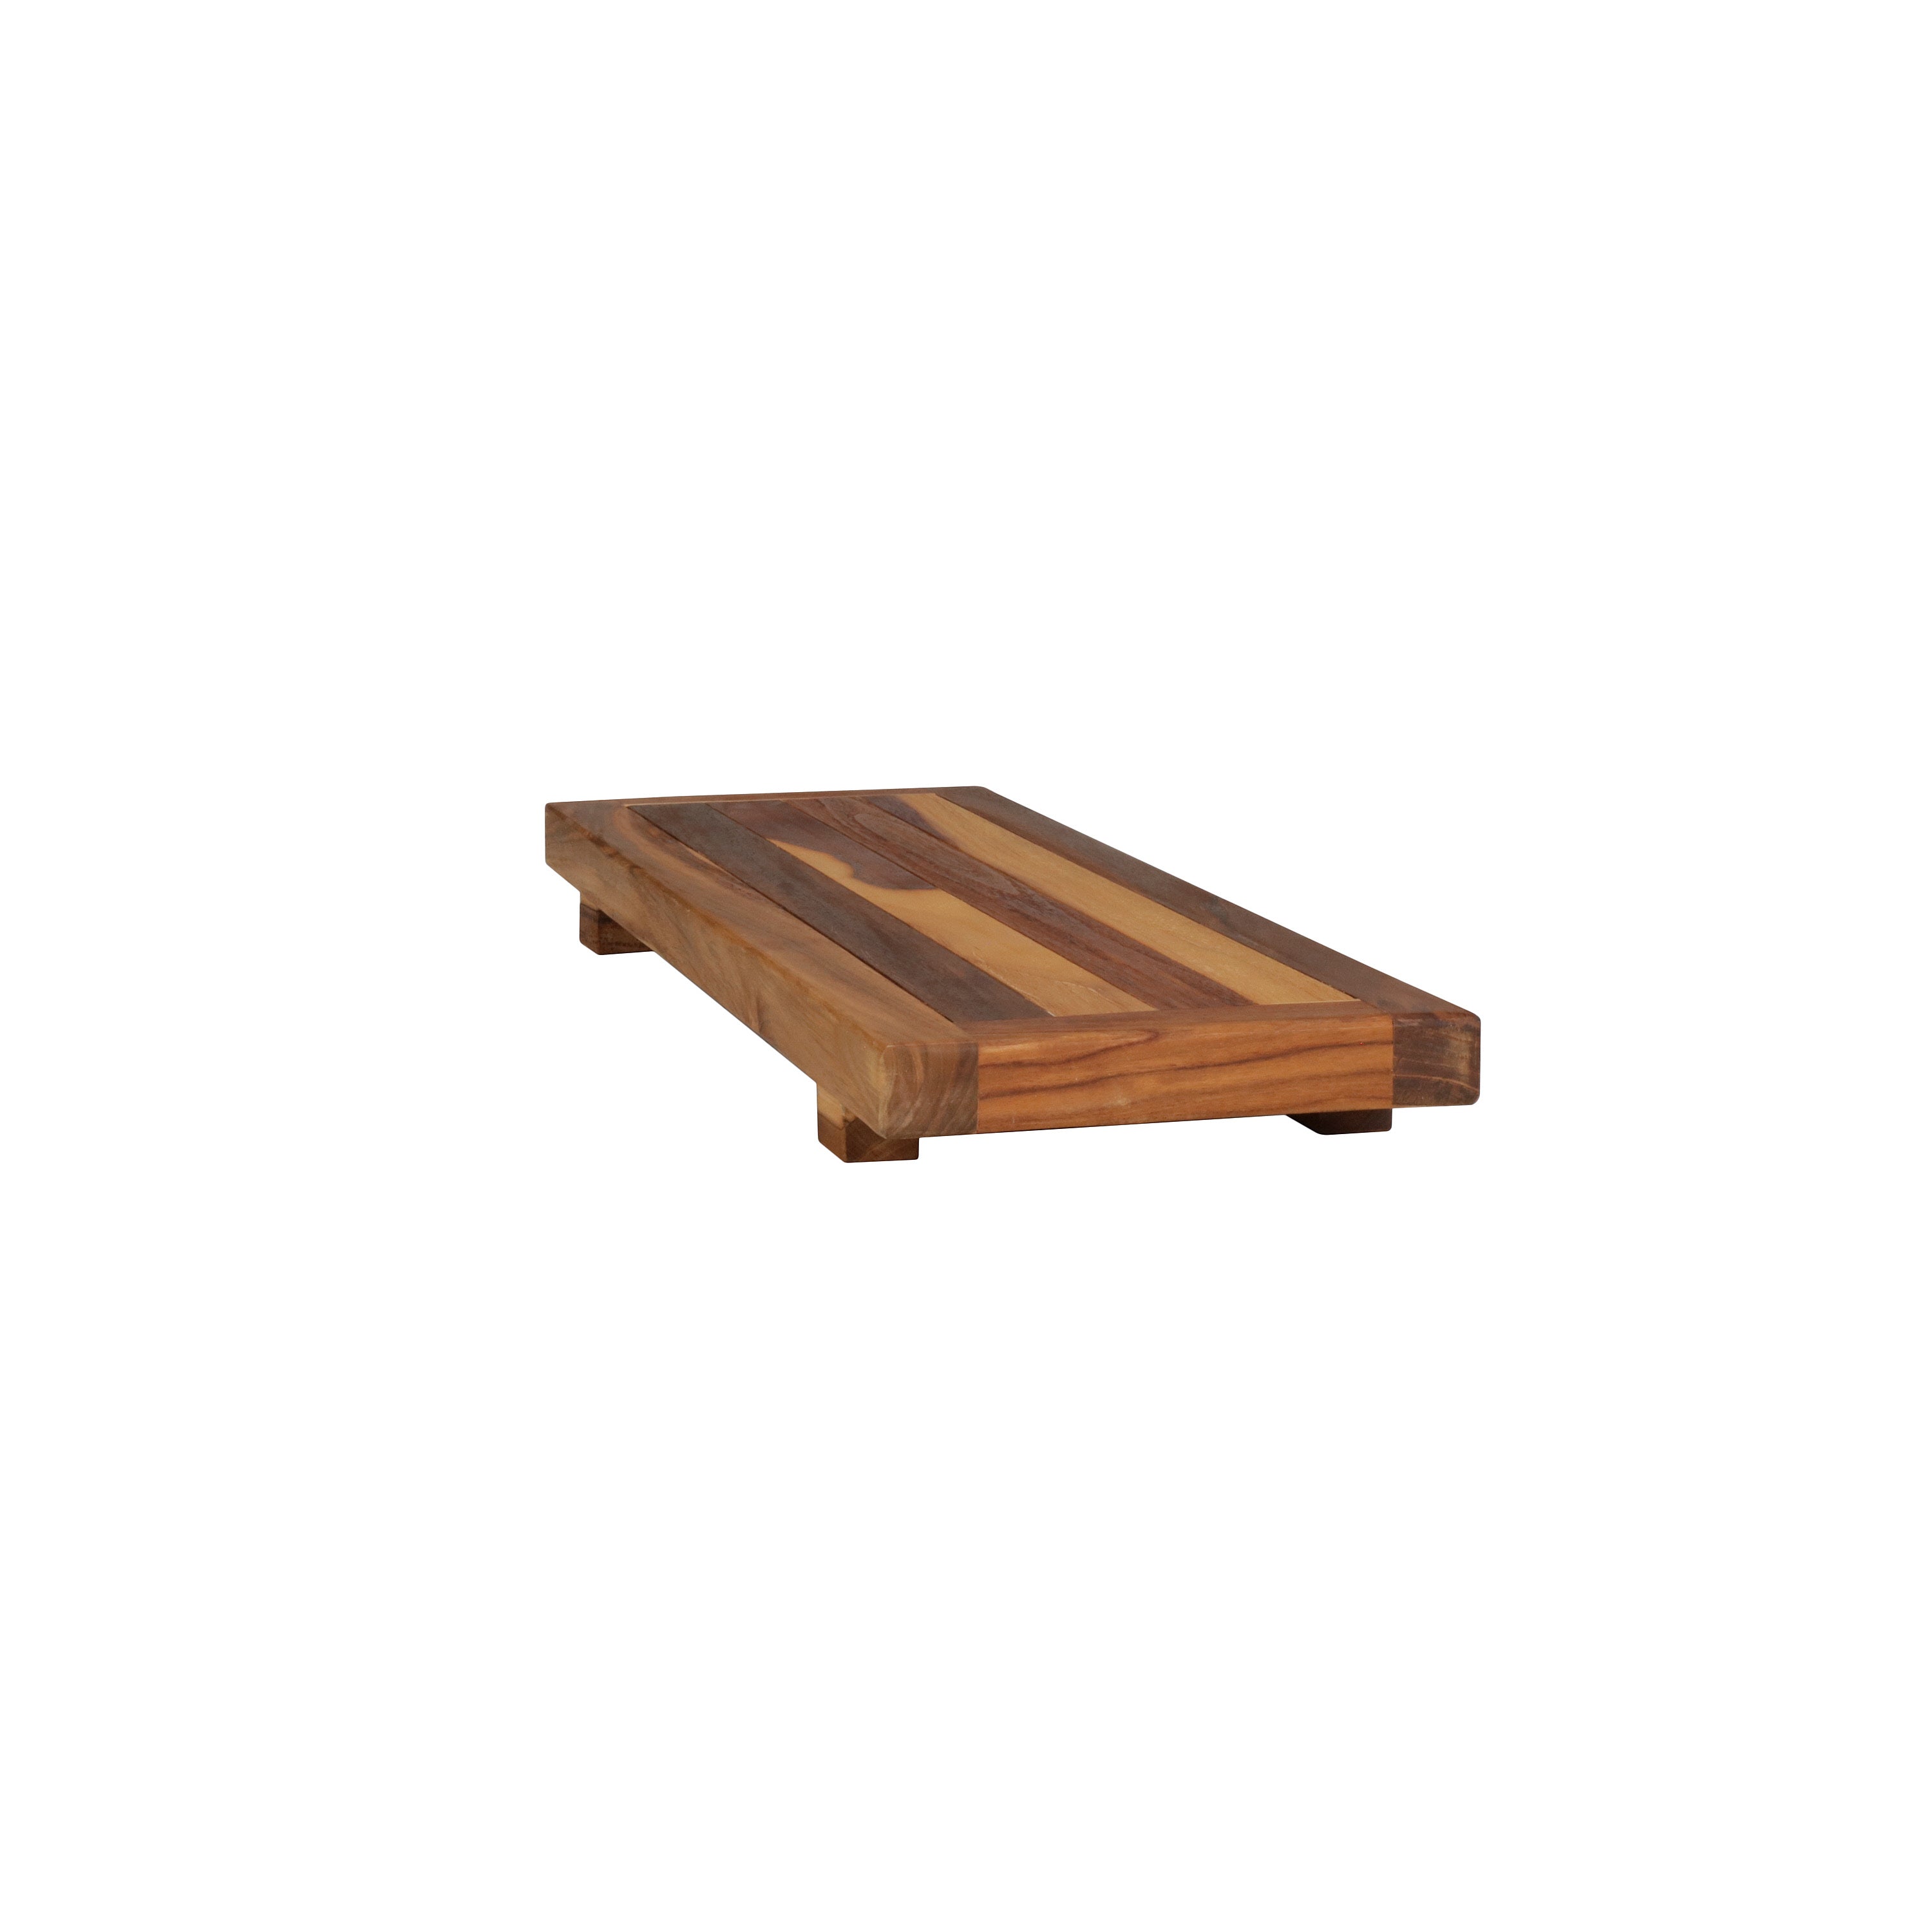 EcoDecors® Eleganto® 29" Teak Wood Bath Tray and Seat in EarthyTeak Finish - The EcoDecors Eleganto 23" x 15" Slatted Solid Teak Bath Floor Mat in EarthyTeak Finish